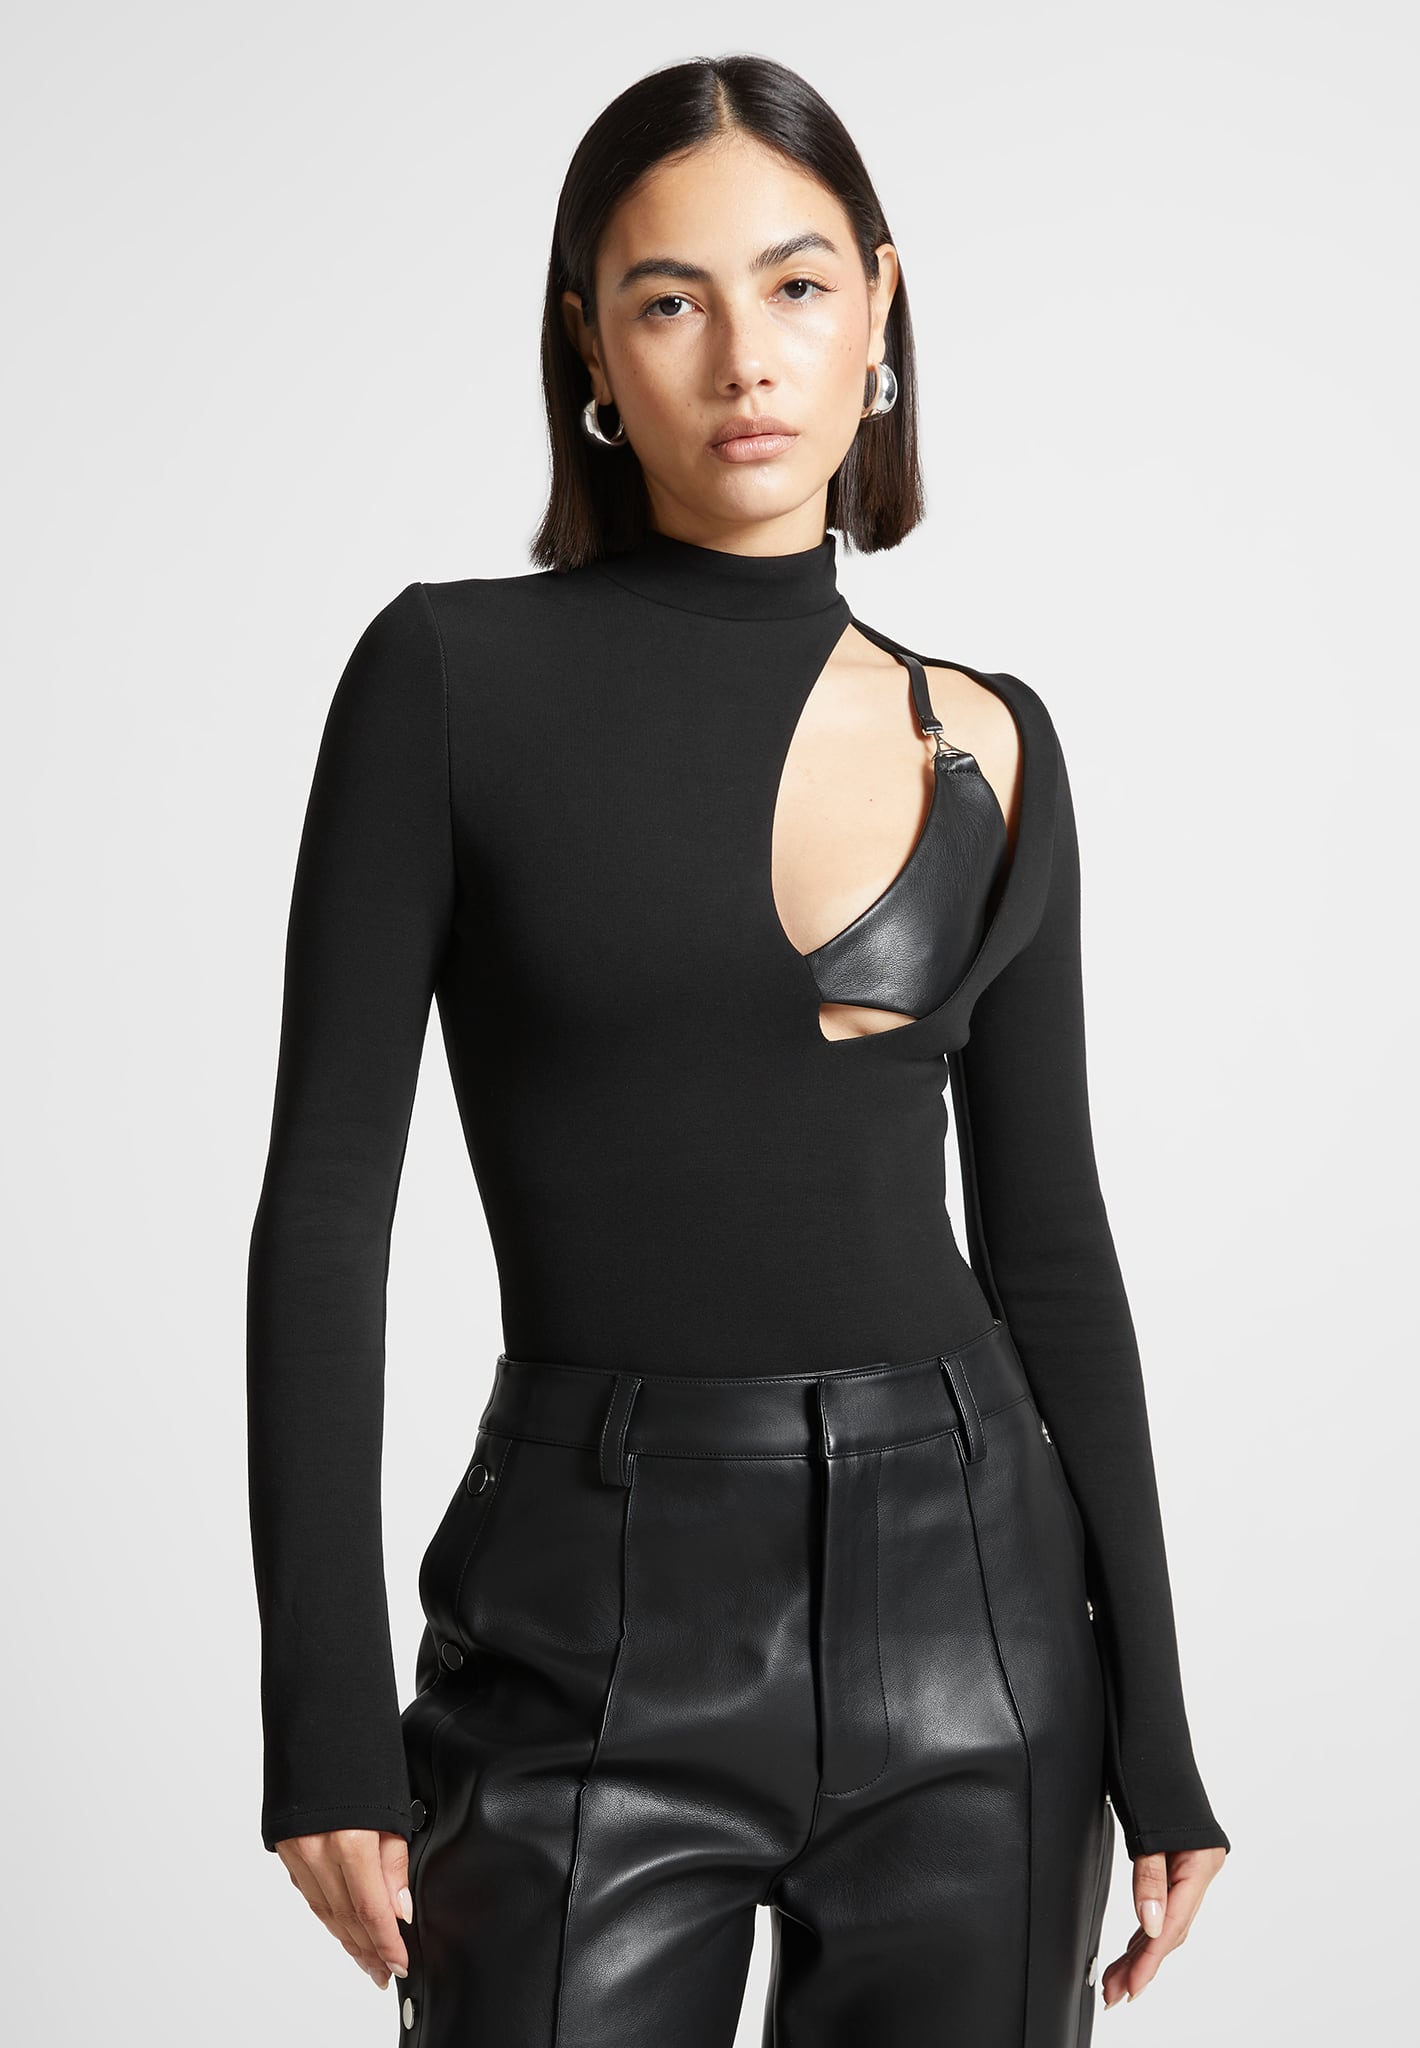 Cut Out Bralette Detail Bodysuit - Black